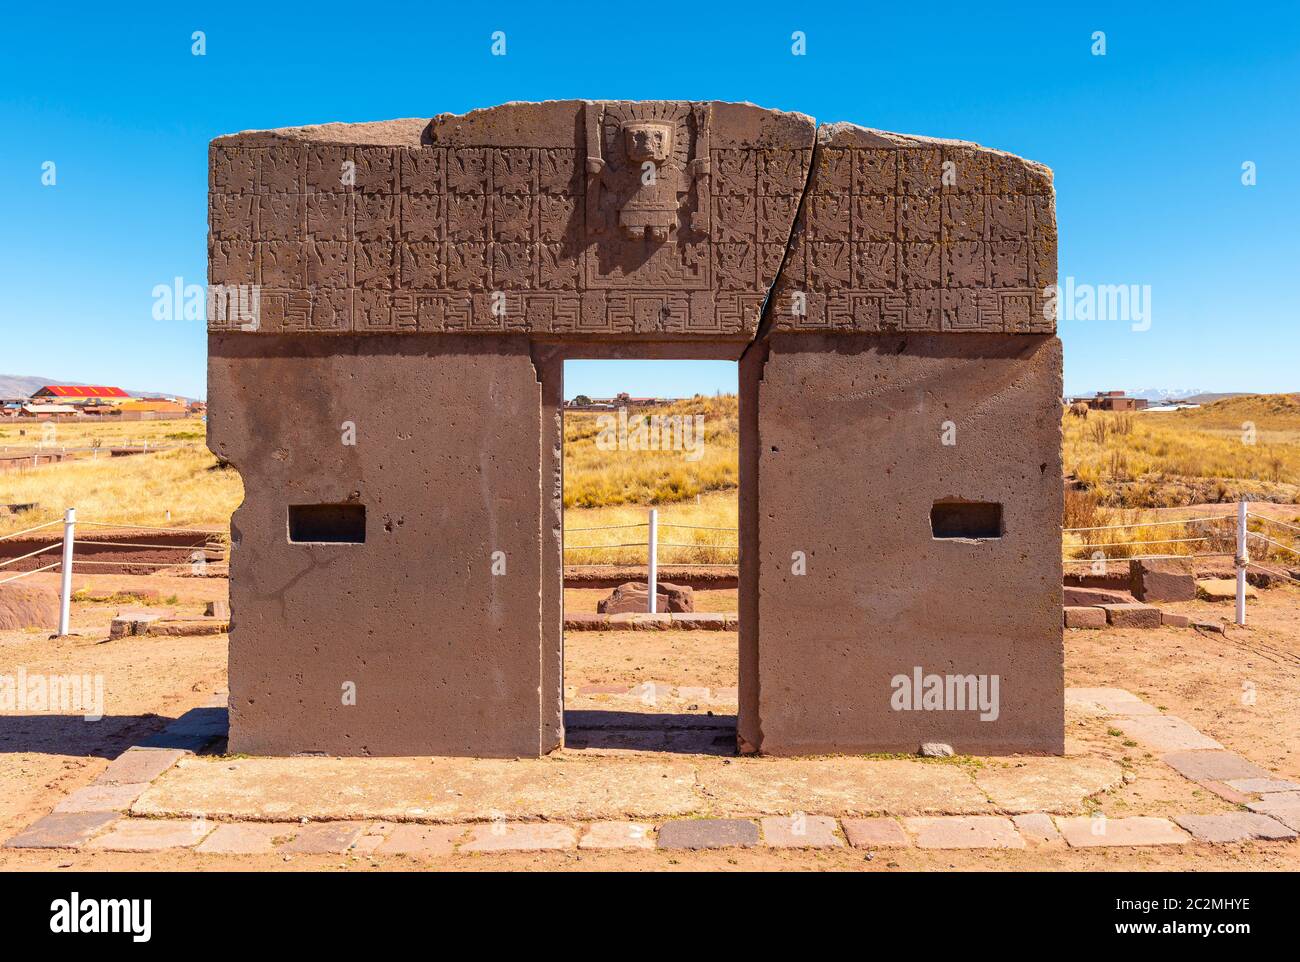 Sun Gate monolith with bas relief decorations of the Creator God Viracocha and a solar calendar, Tiwanaku, La Paz, Bolivia. Stock Photo